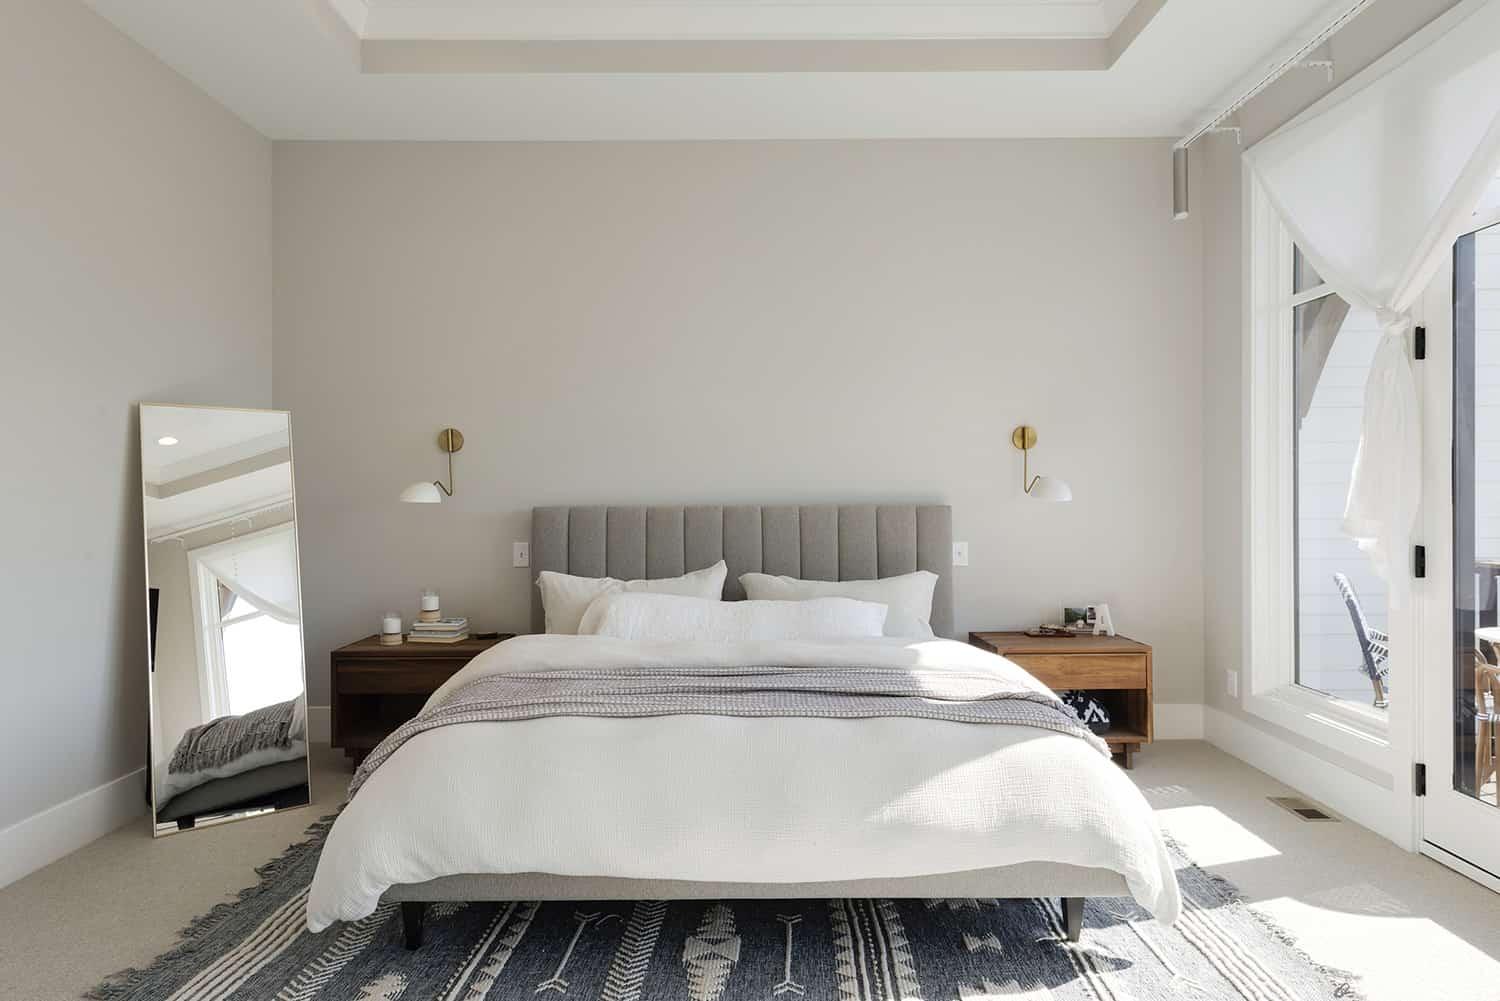  prairie-transitional-style-bedroom